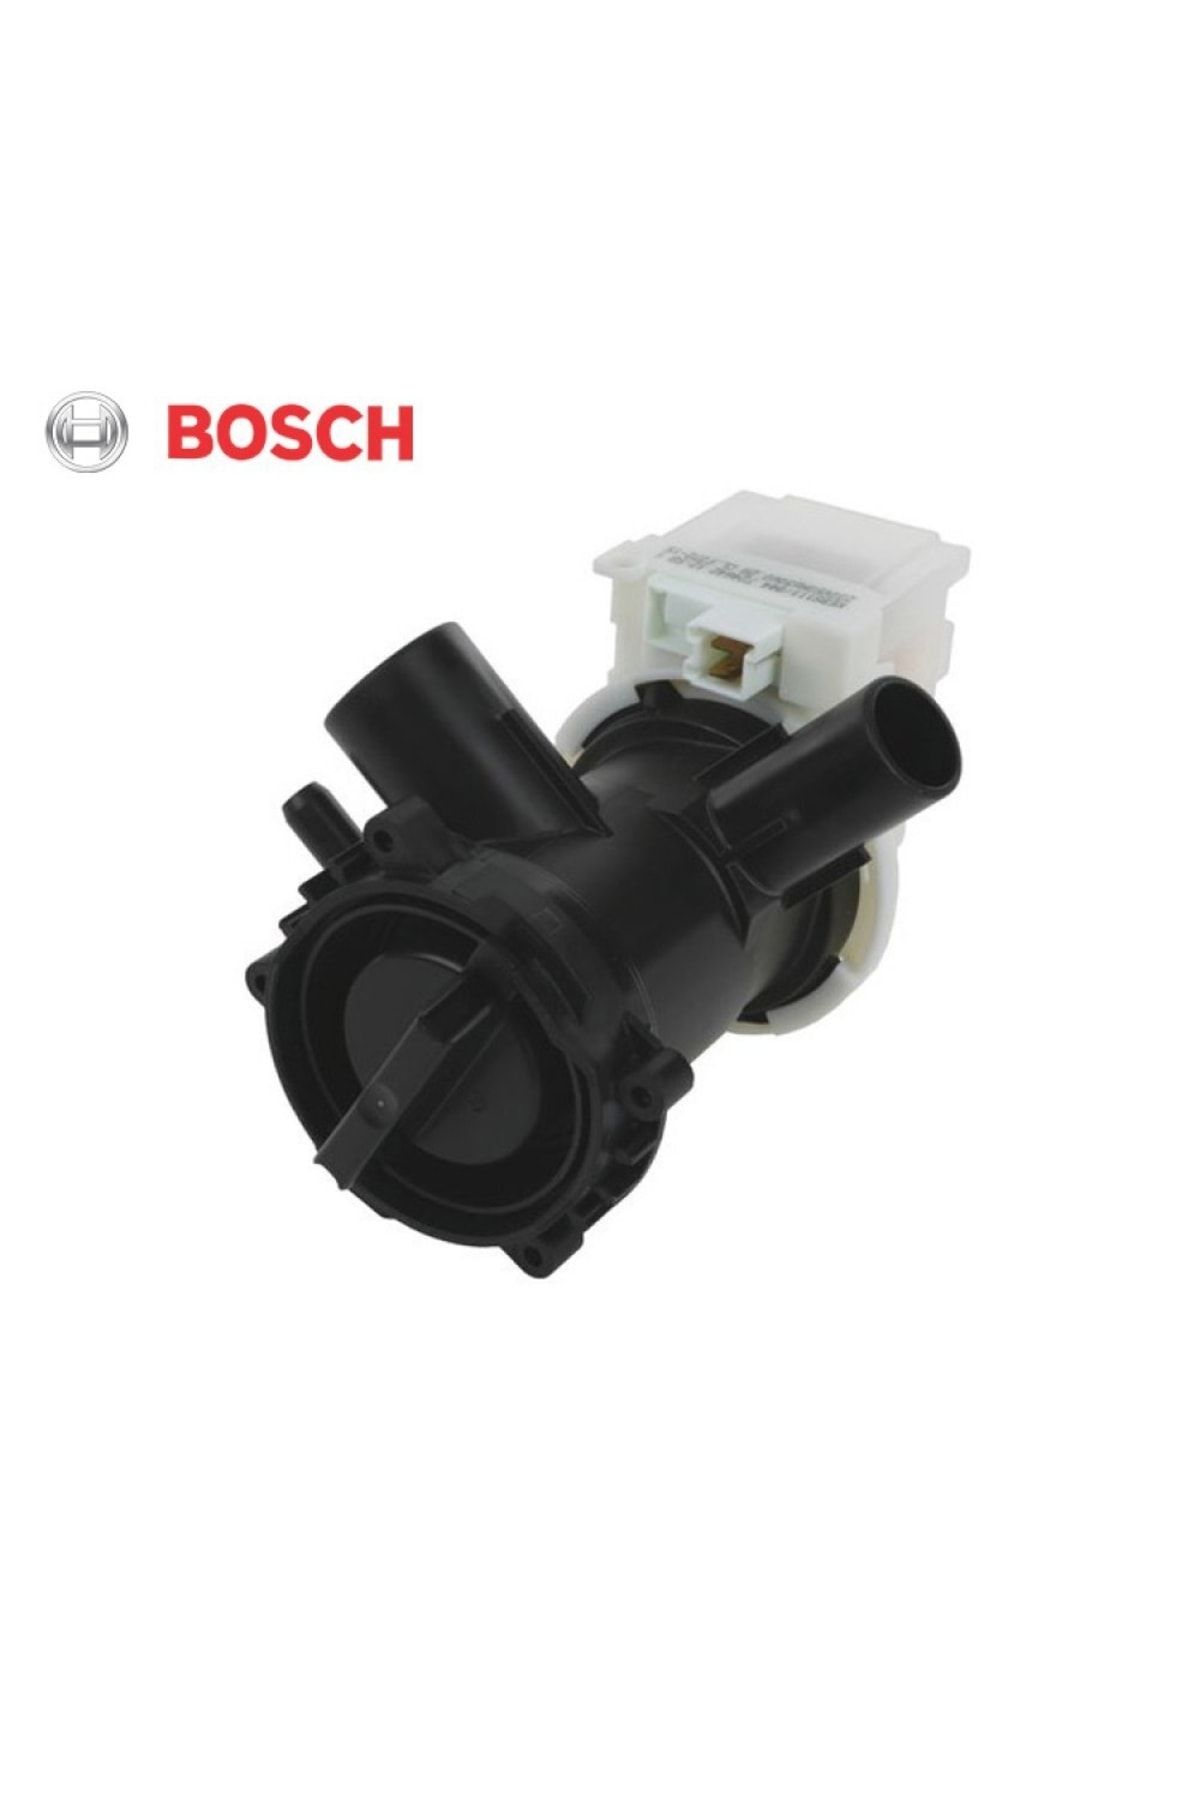 Bosch Siemens Profilo Çamaşır Makinası Orjinal Pompa Motoru. Cihazınızla Uygunluğu Sorgulayınız.